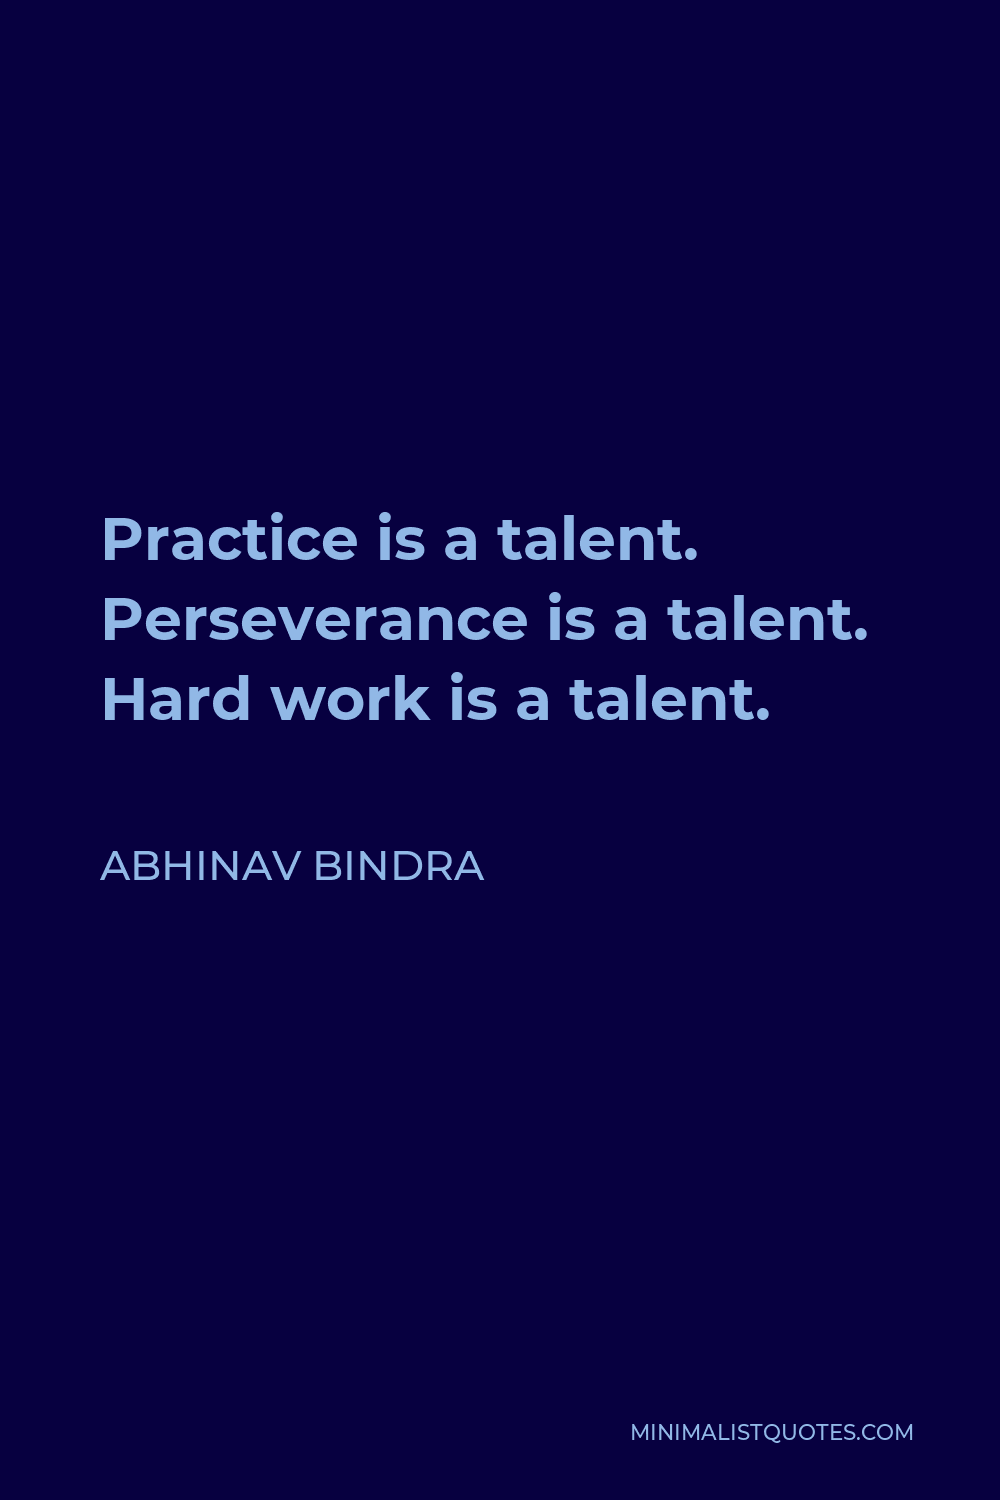 Abhinav Bindra Quote - Practice is a talent. Perseverance is a talent. Hard work is a talent.